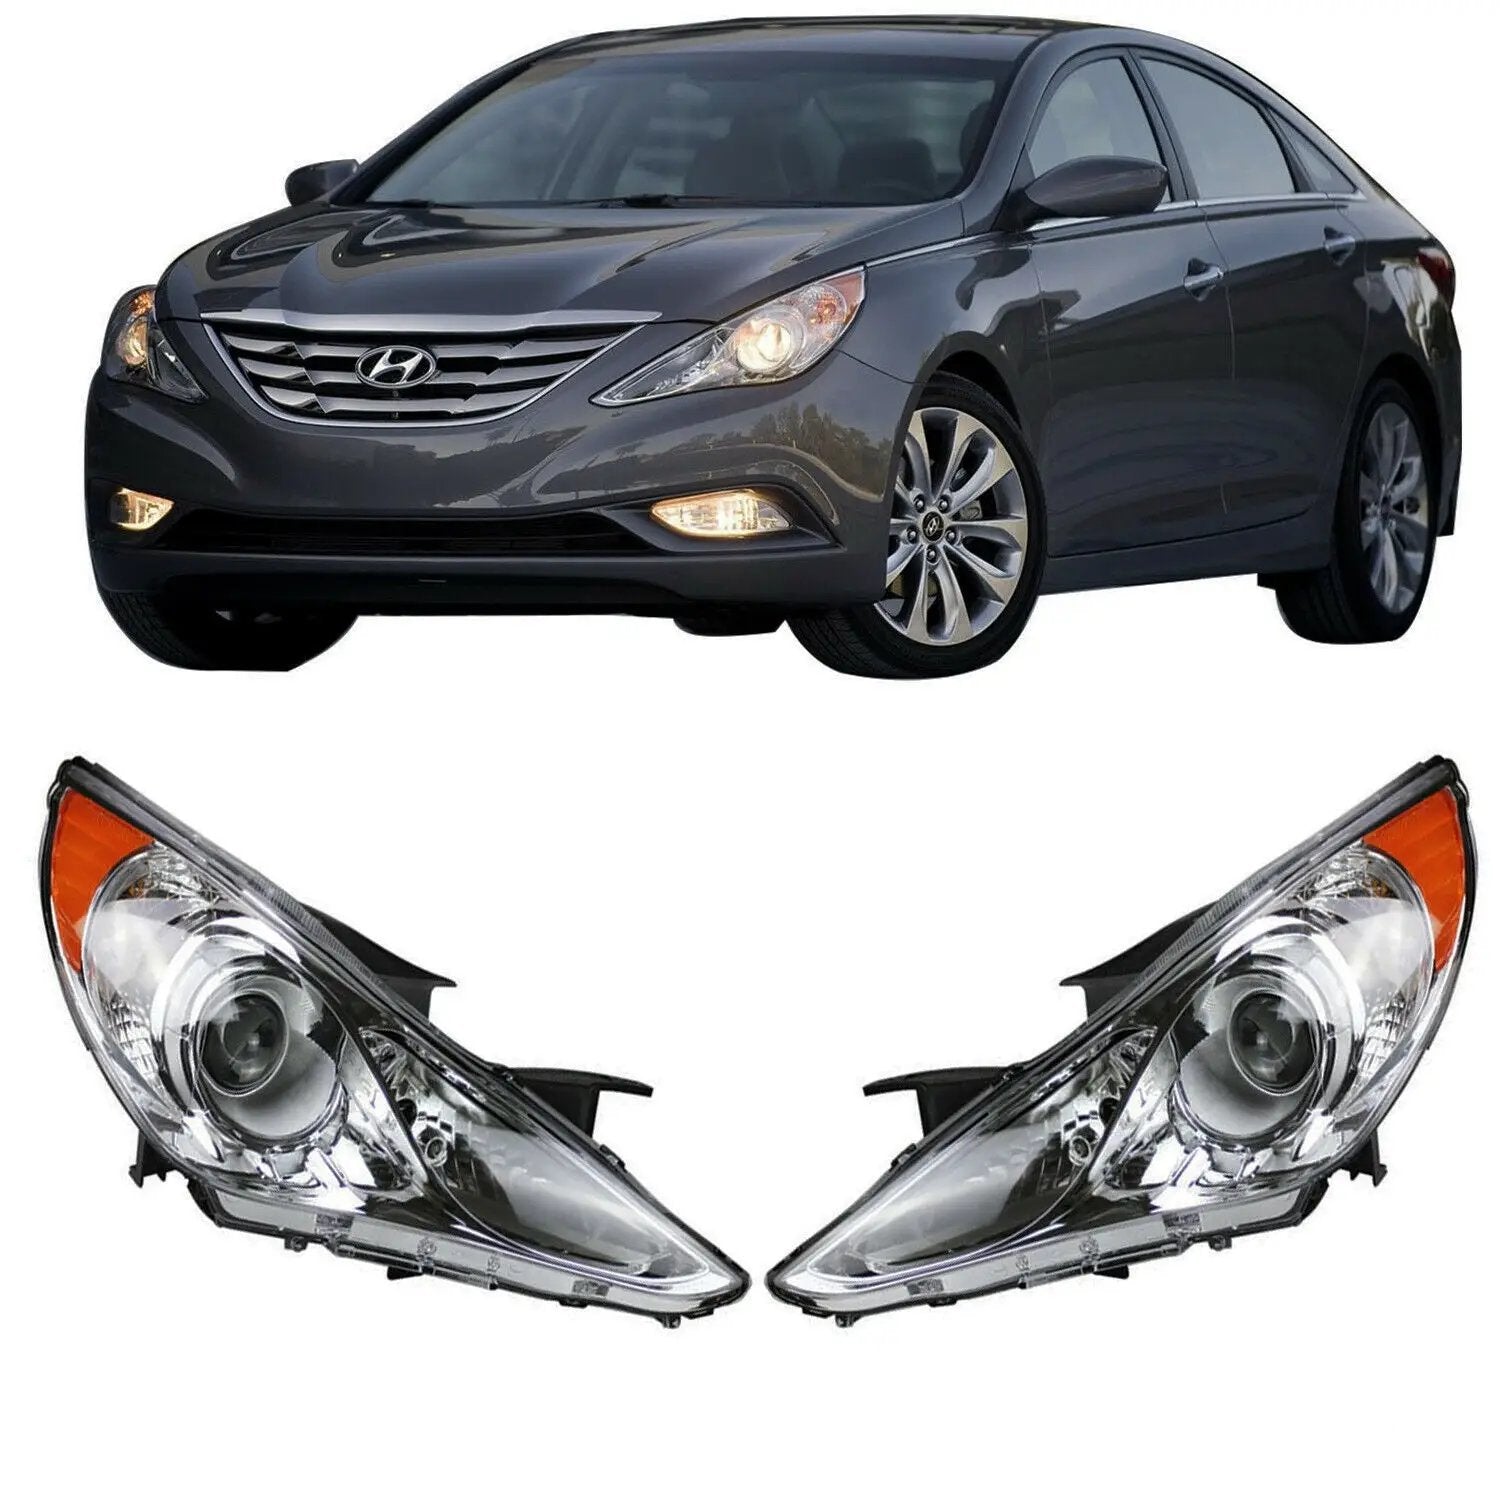 Headlight Lamps Housing for Hyundai Sonata 2011-2014 Left & Right Side